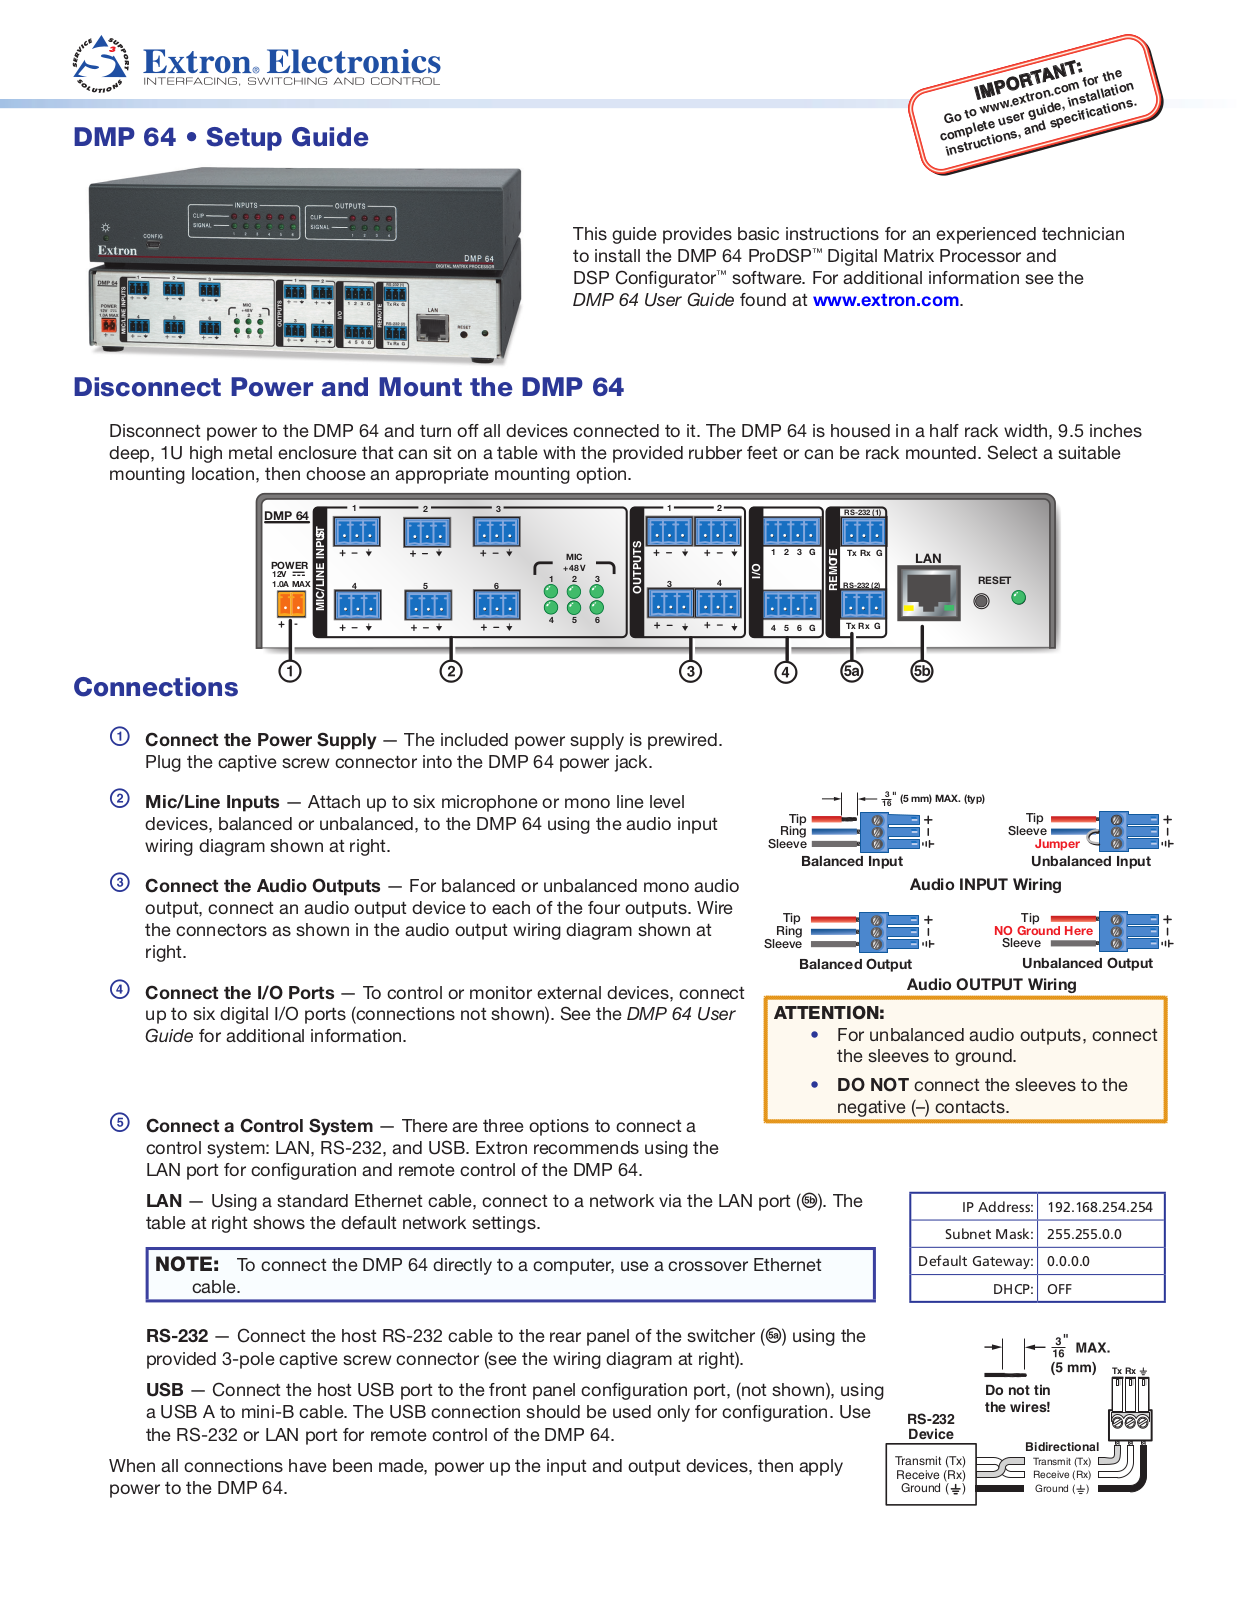 Extron Electronics DMP 64 Setup Guide